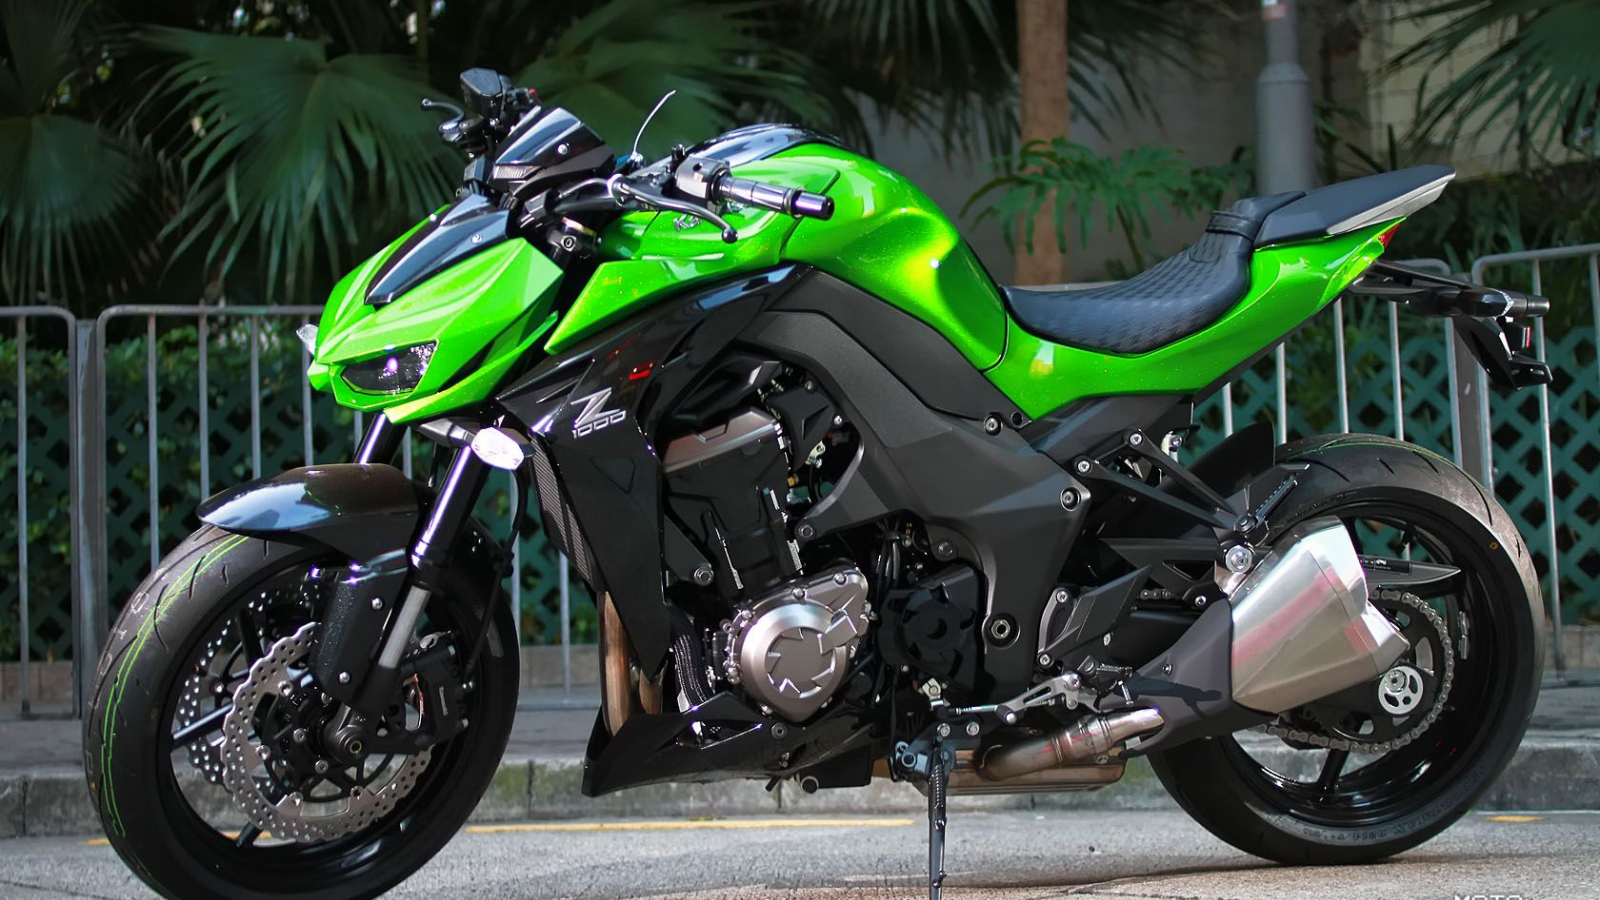 Kawasaki z1000: фото, технические характеристики, отзывы о ninja